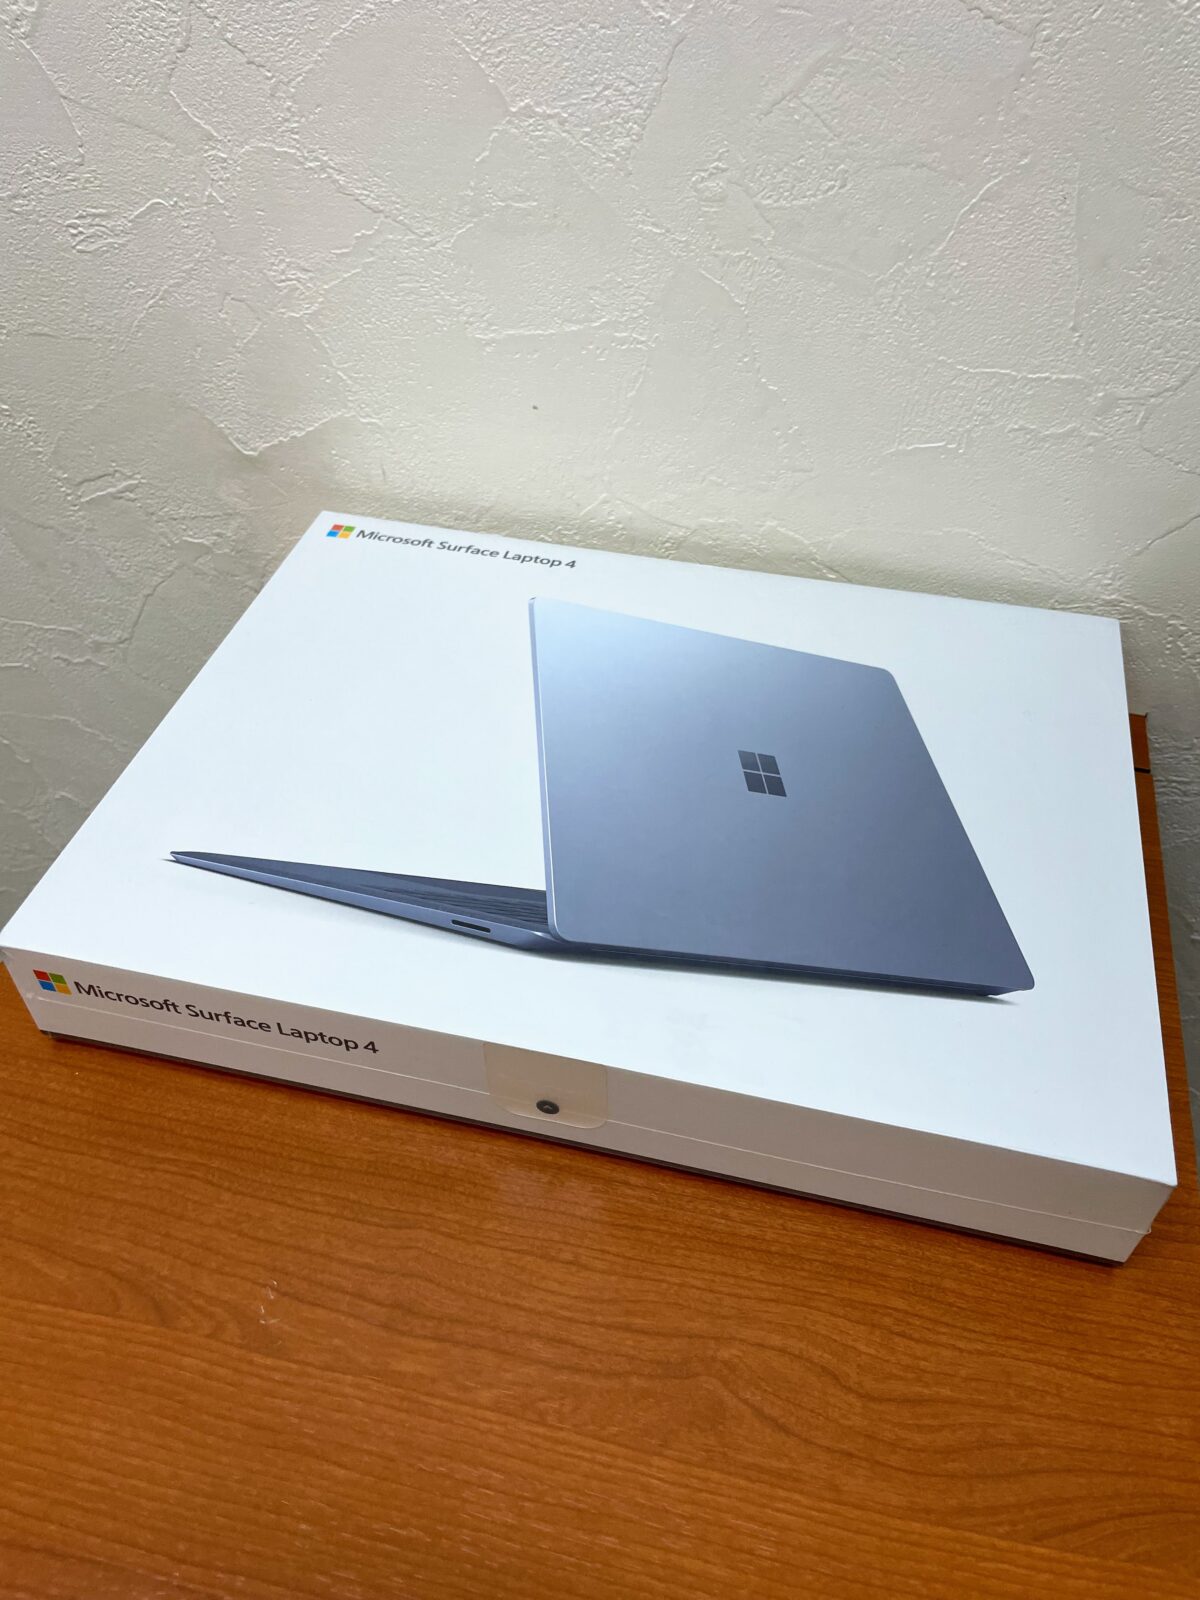 Microsoft Surface 新品未使用 Laptop4 - nimfomane.com